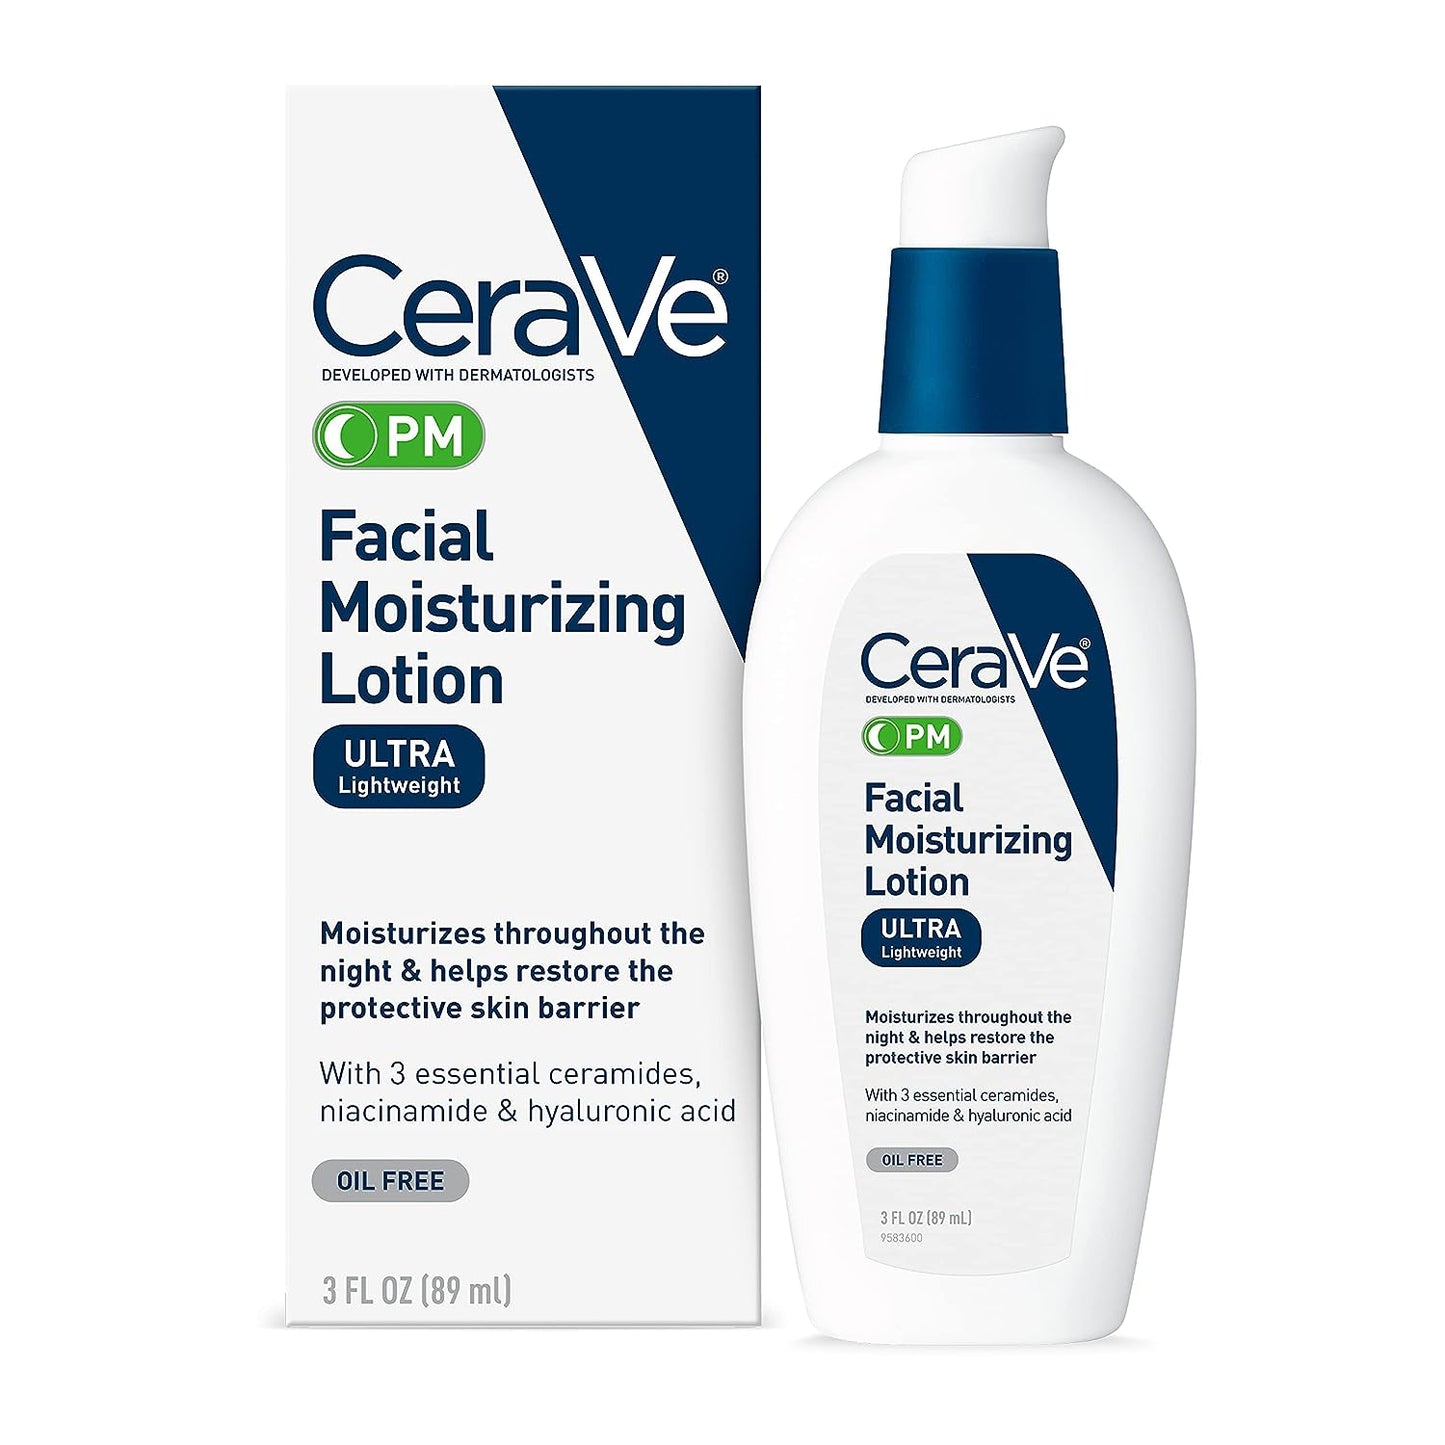 Cerave Facial Moisturizing Lotion Pm 3 Oz(89ml)